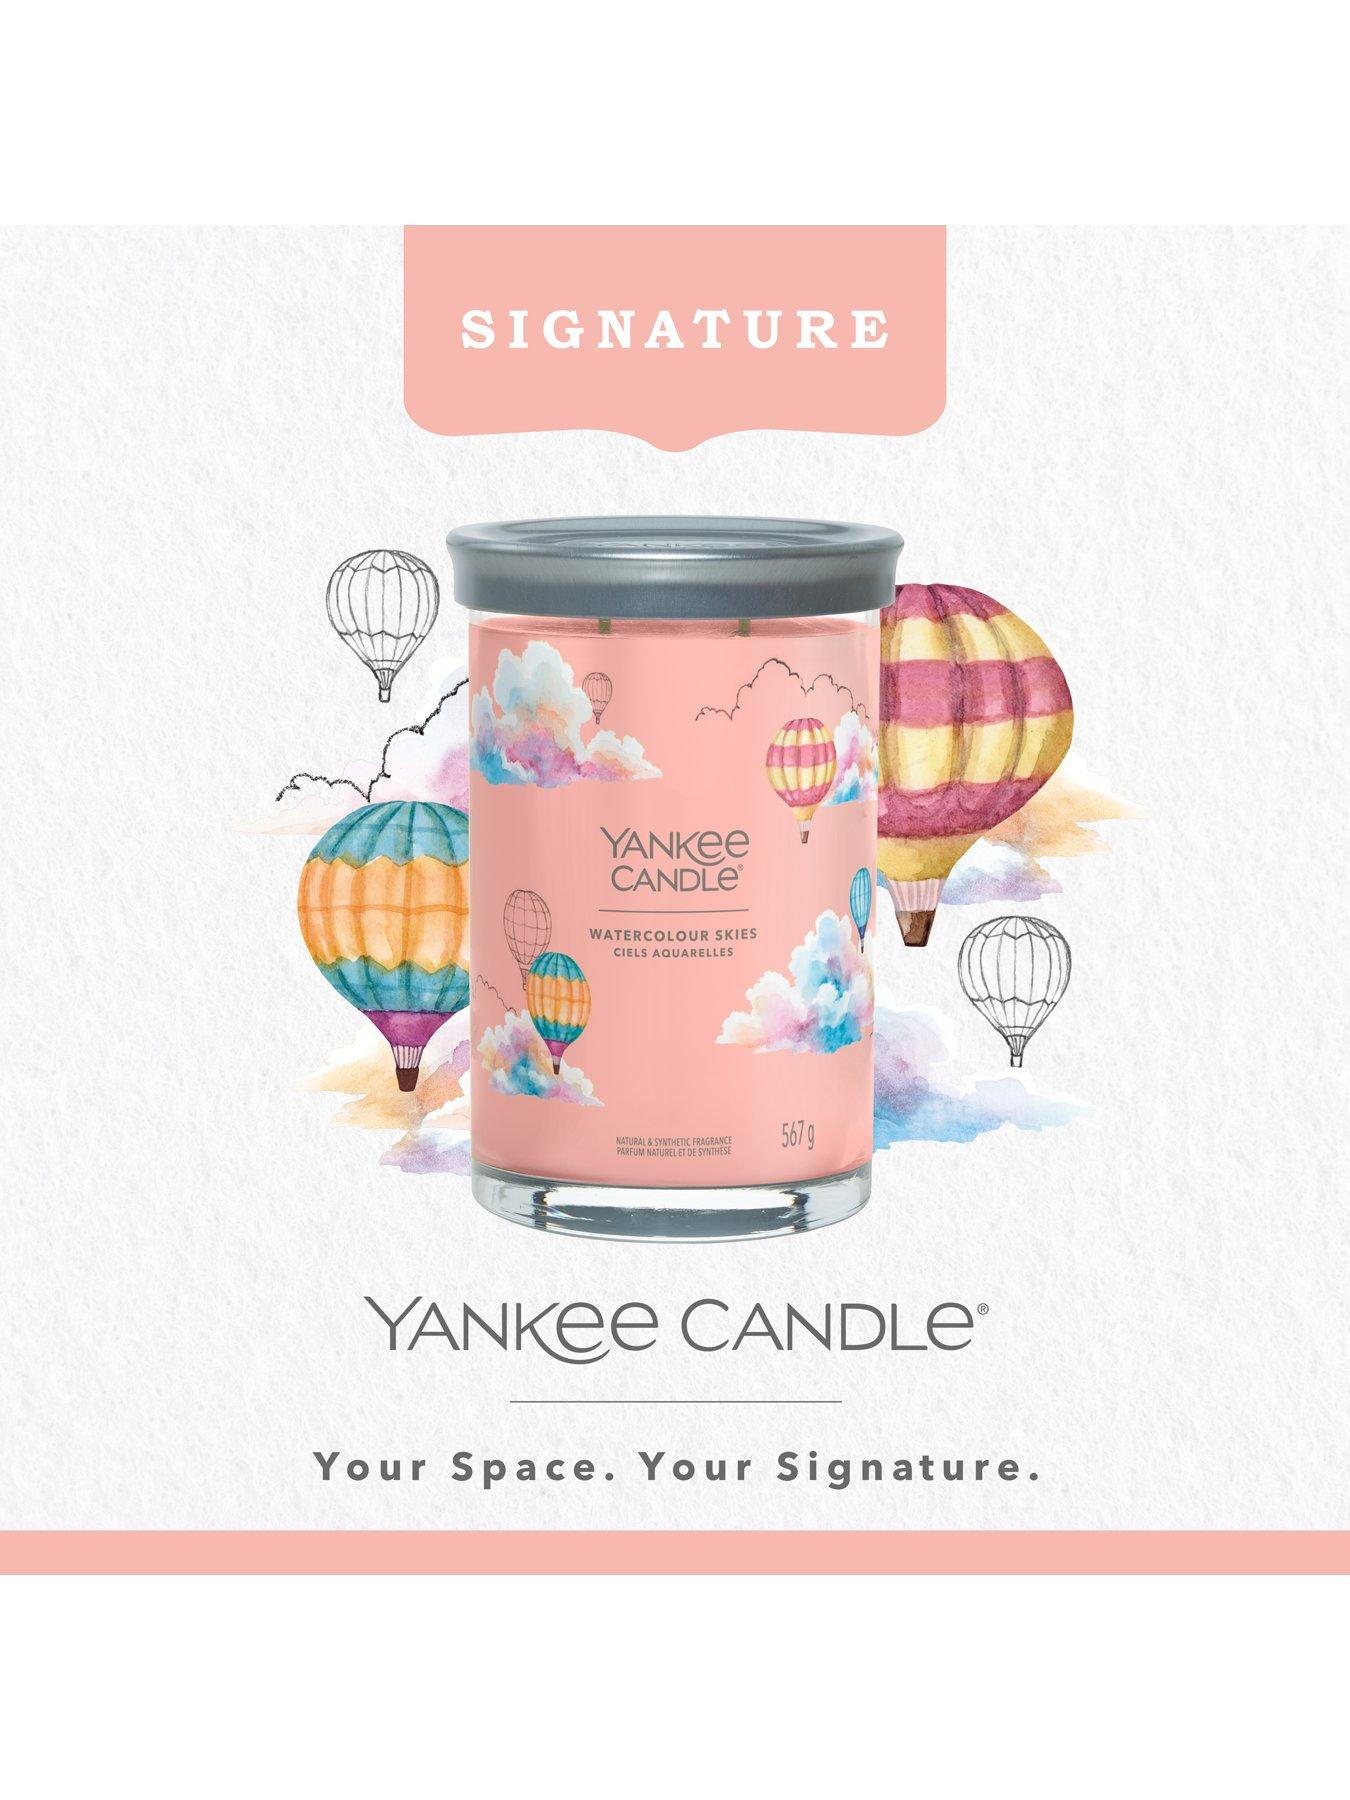 Yankee Candle Gift Set 3 Signature Small Tumbler Set - Balsam